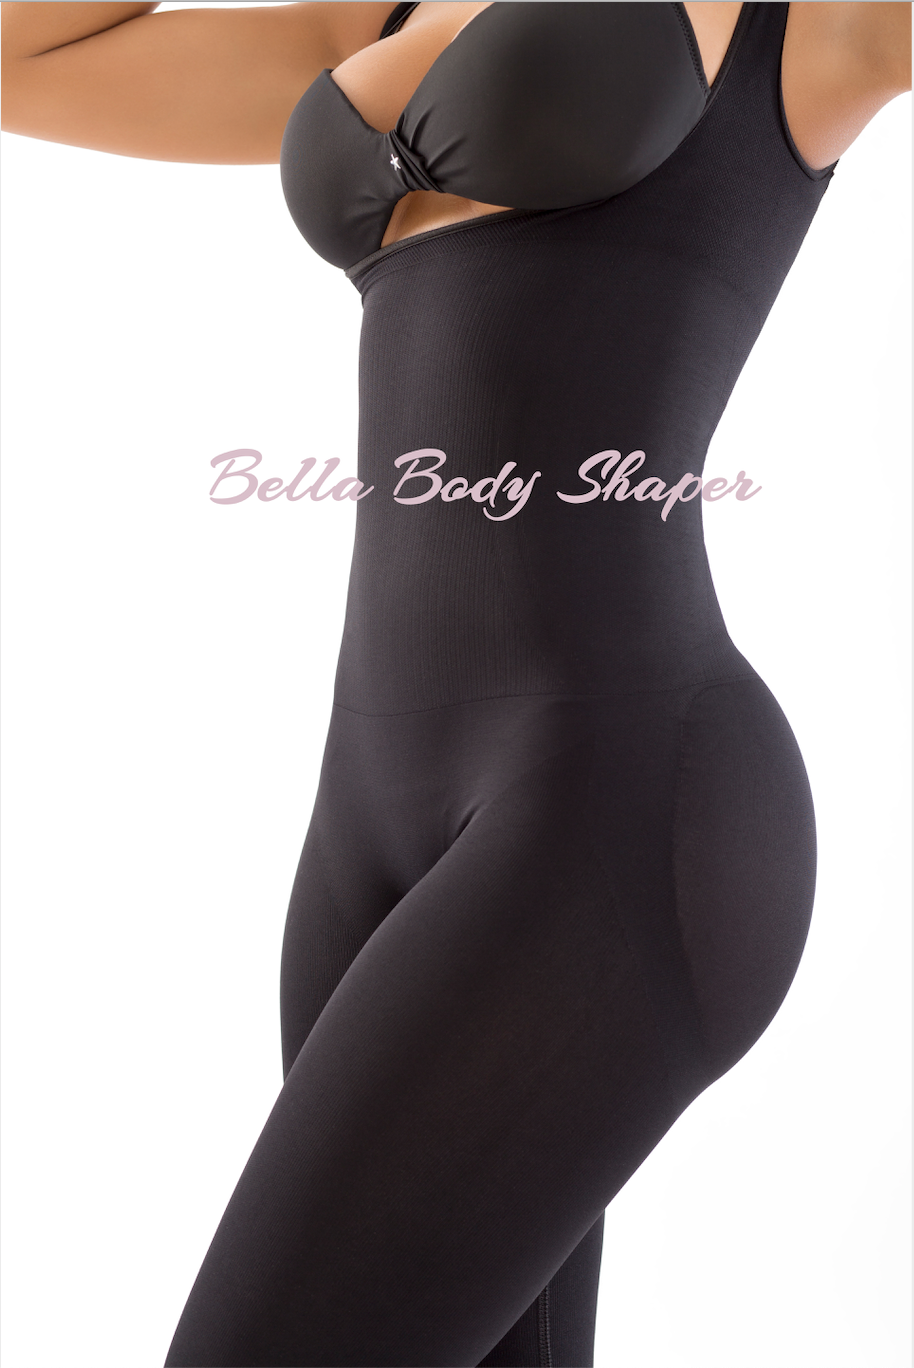 Bella Body - Fit In Right - Ref 660 – Bellabodyshaper